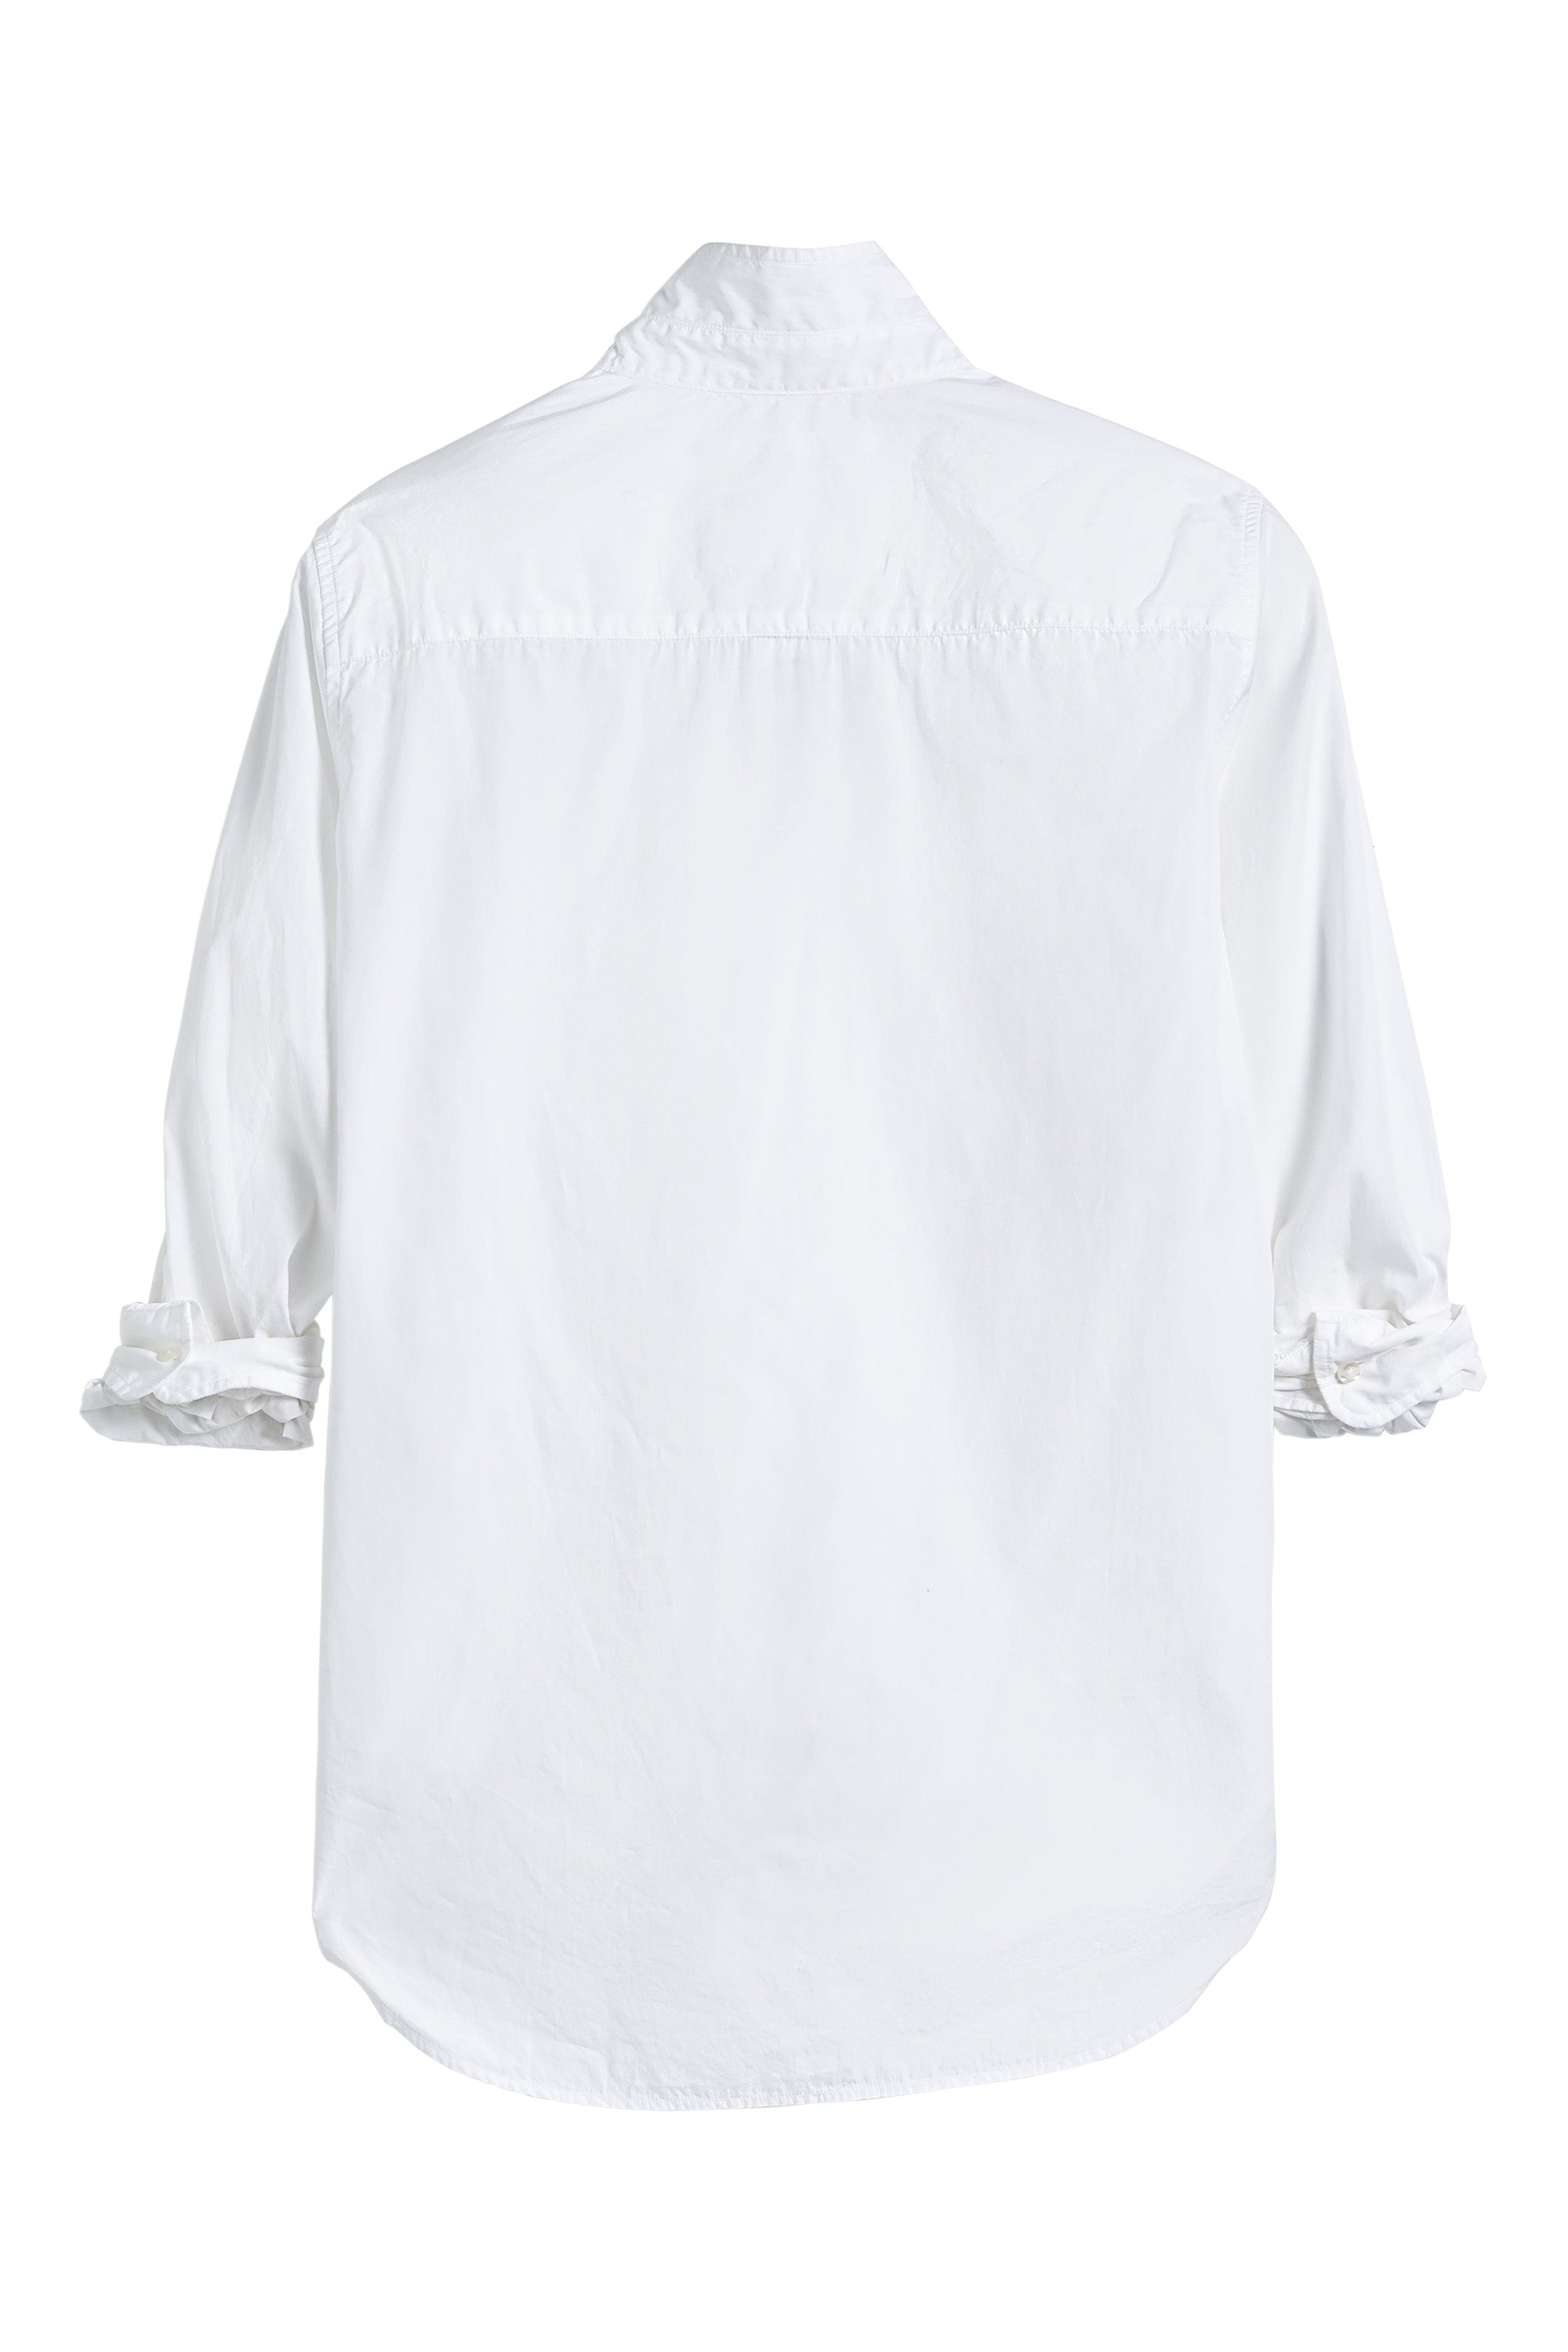 Frank & Eileen Eileen Woven Button Up - Vintage White on Garmentory